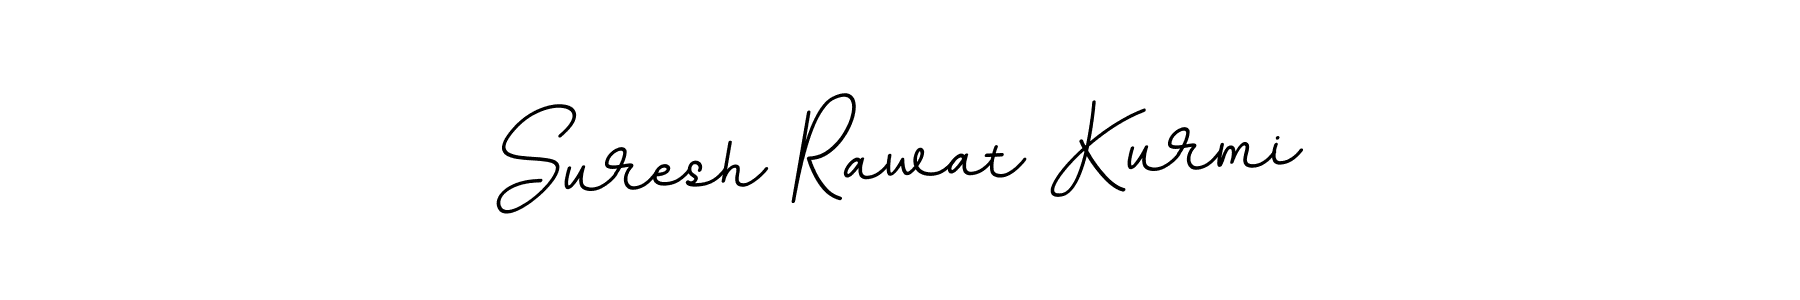 How to Draw Suresh Rawat Kurmi signature style? BallpointsItalic-DORy9 is a latest design signature styles for name Suresh Rawat Kurmi. Suresh Rawat Kurmi signature style 11 images and pictures png